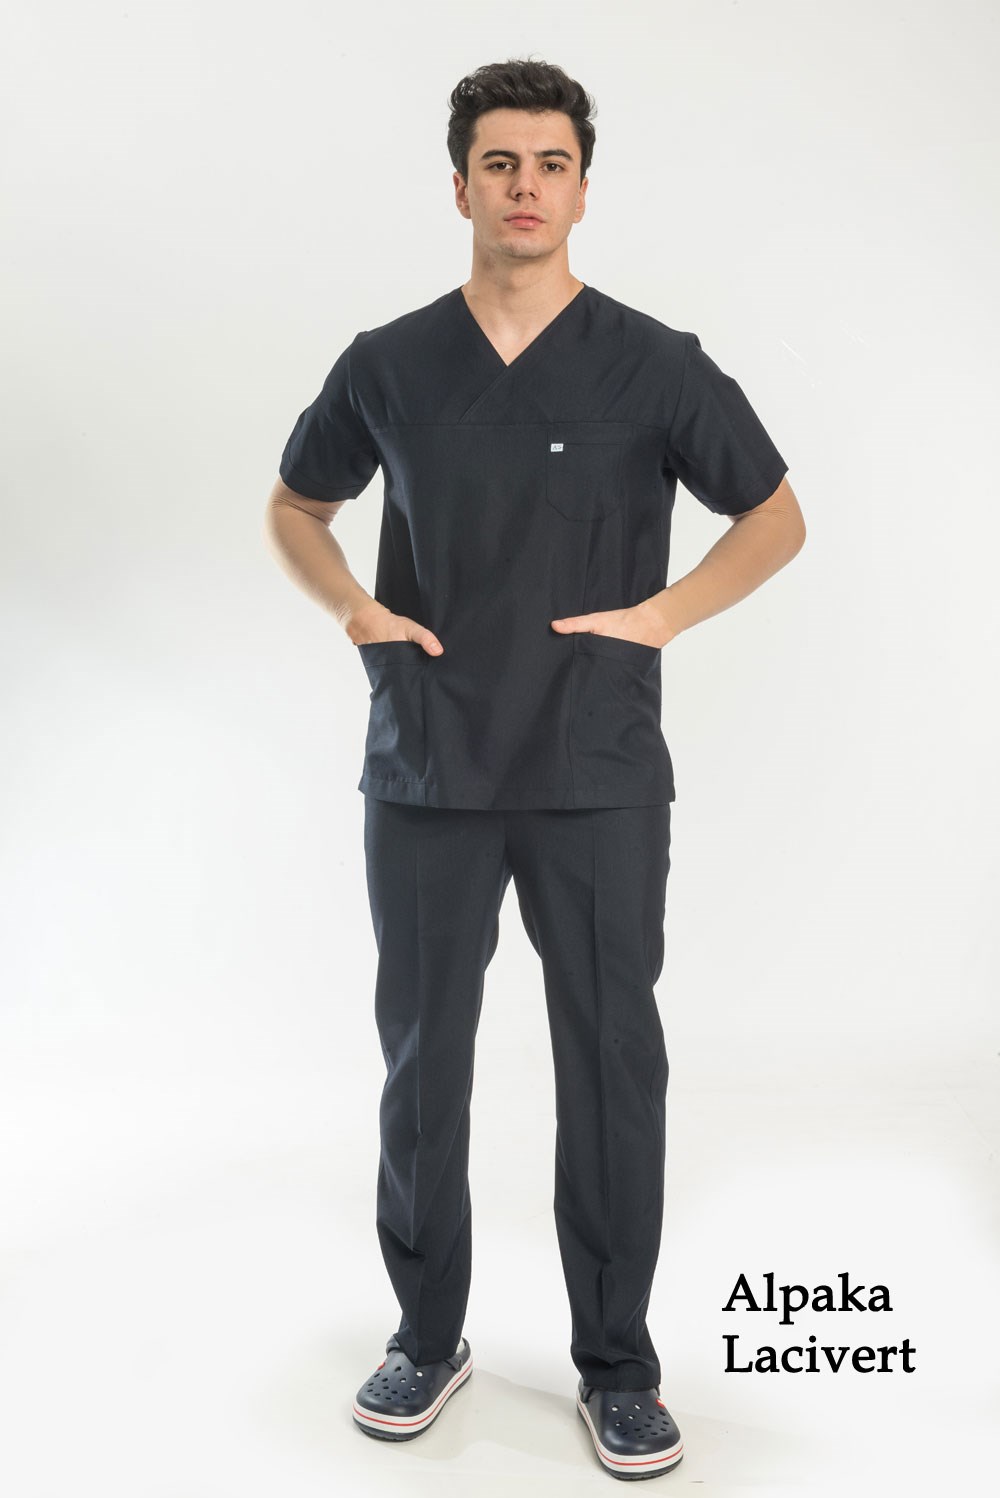 Lacivert alpaka kumaş scrubs, Lacivert renkli doktor forması, Lacivert  Nöbet Kıyafeti